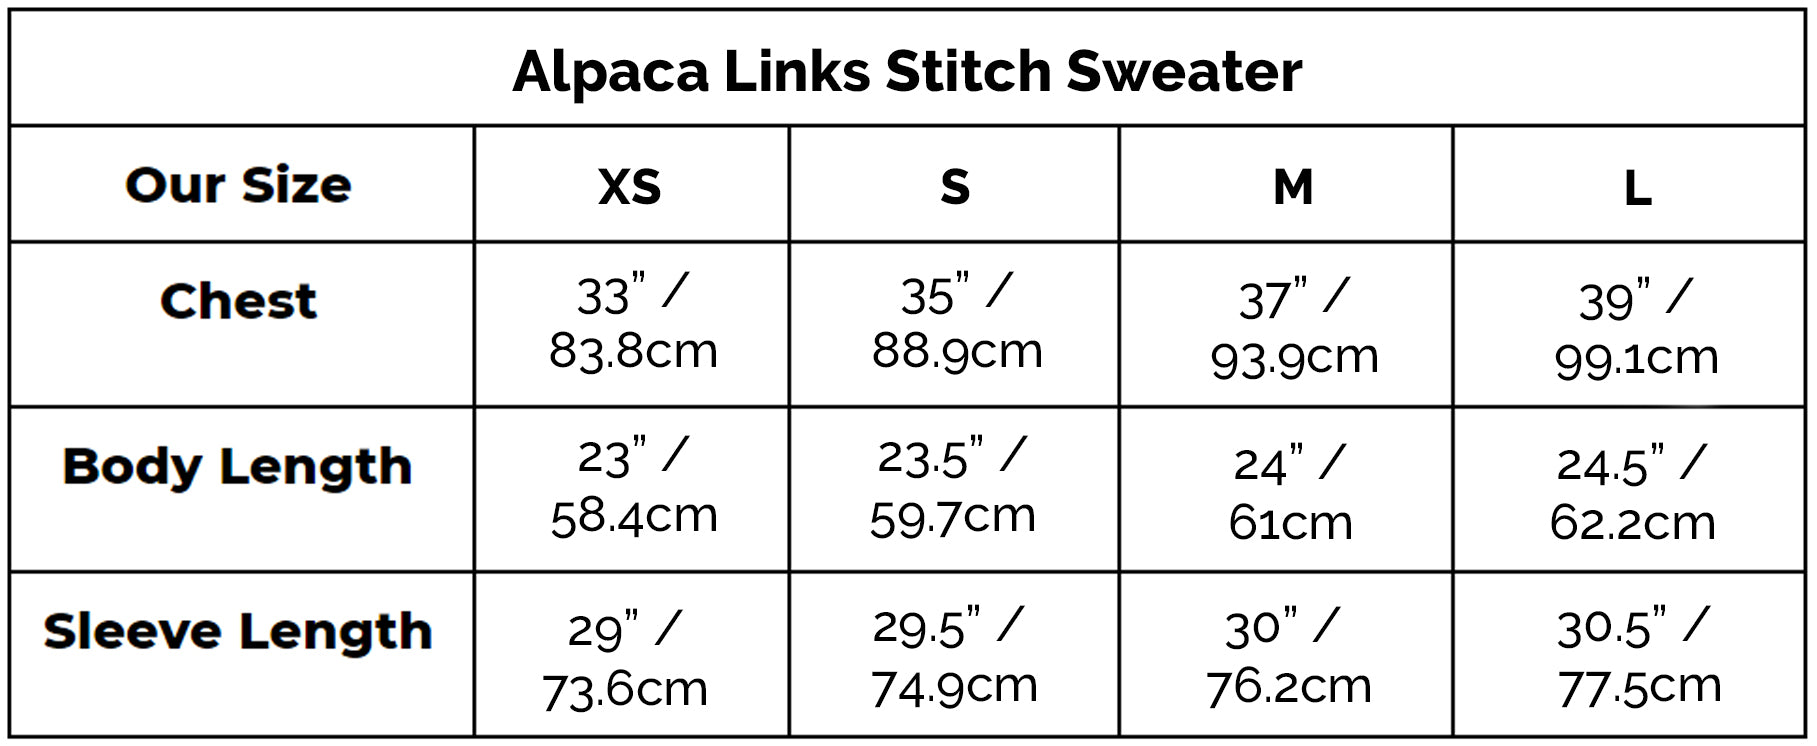 Alpaca Links Stitch Sweater Size Guide